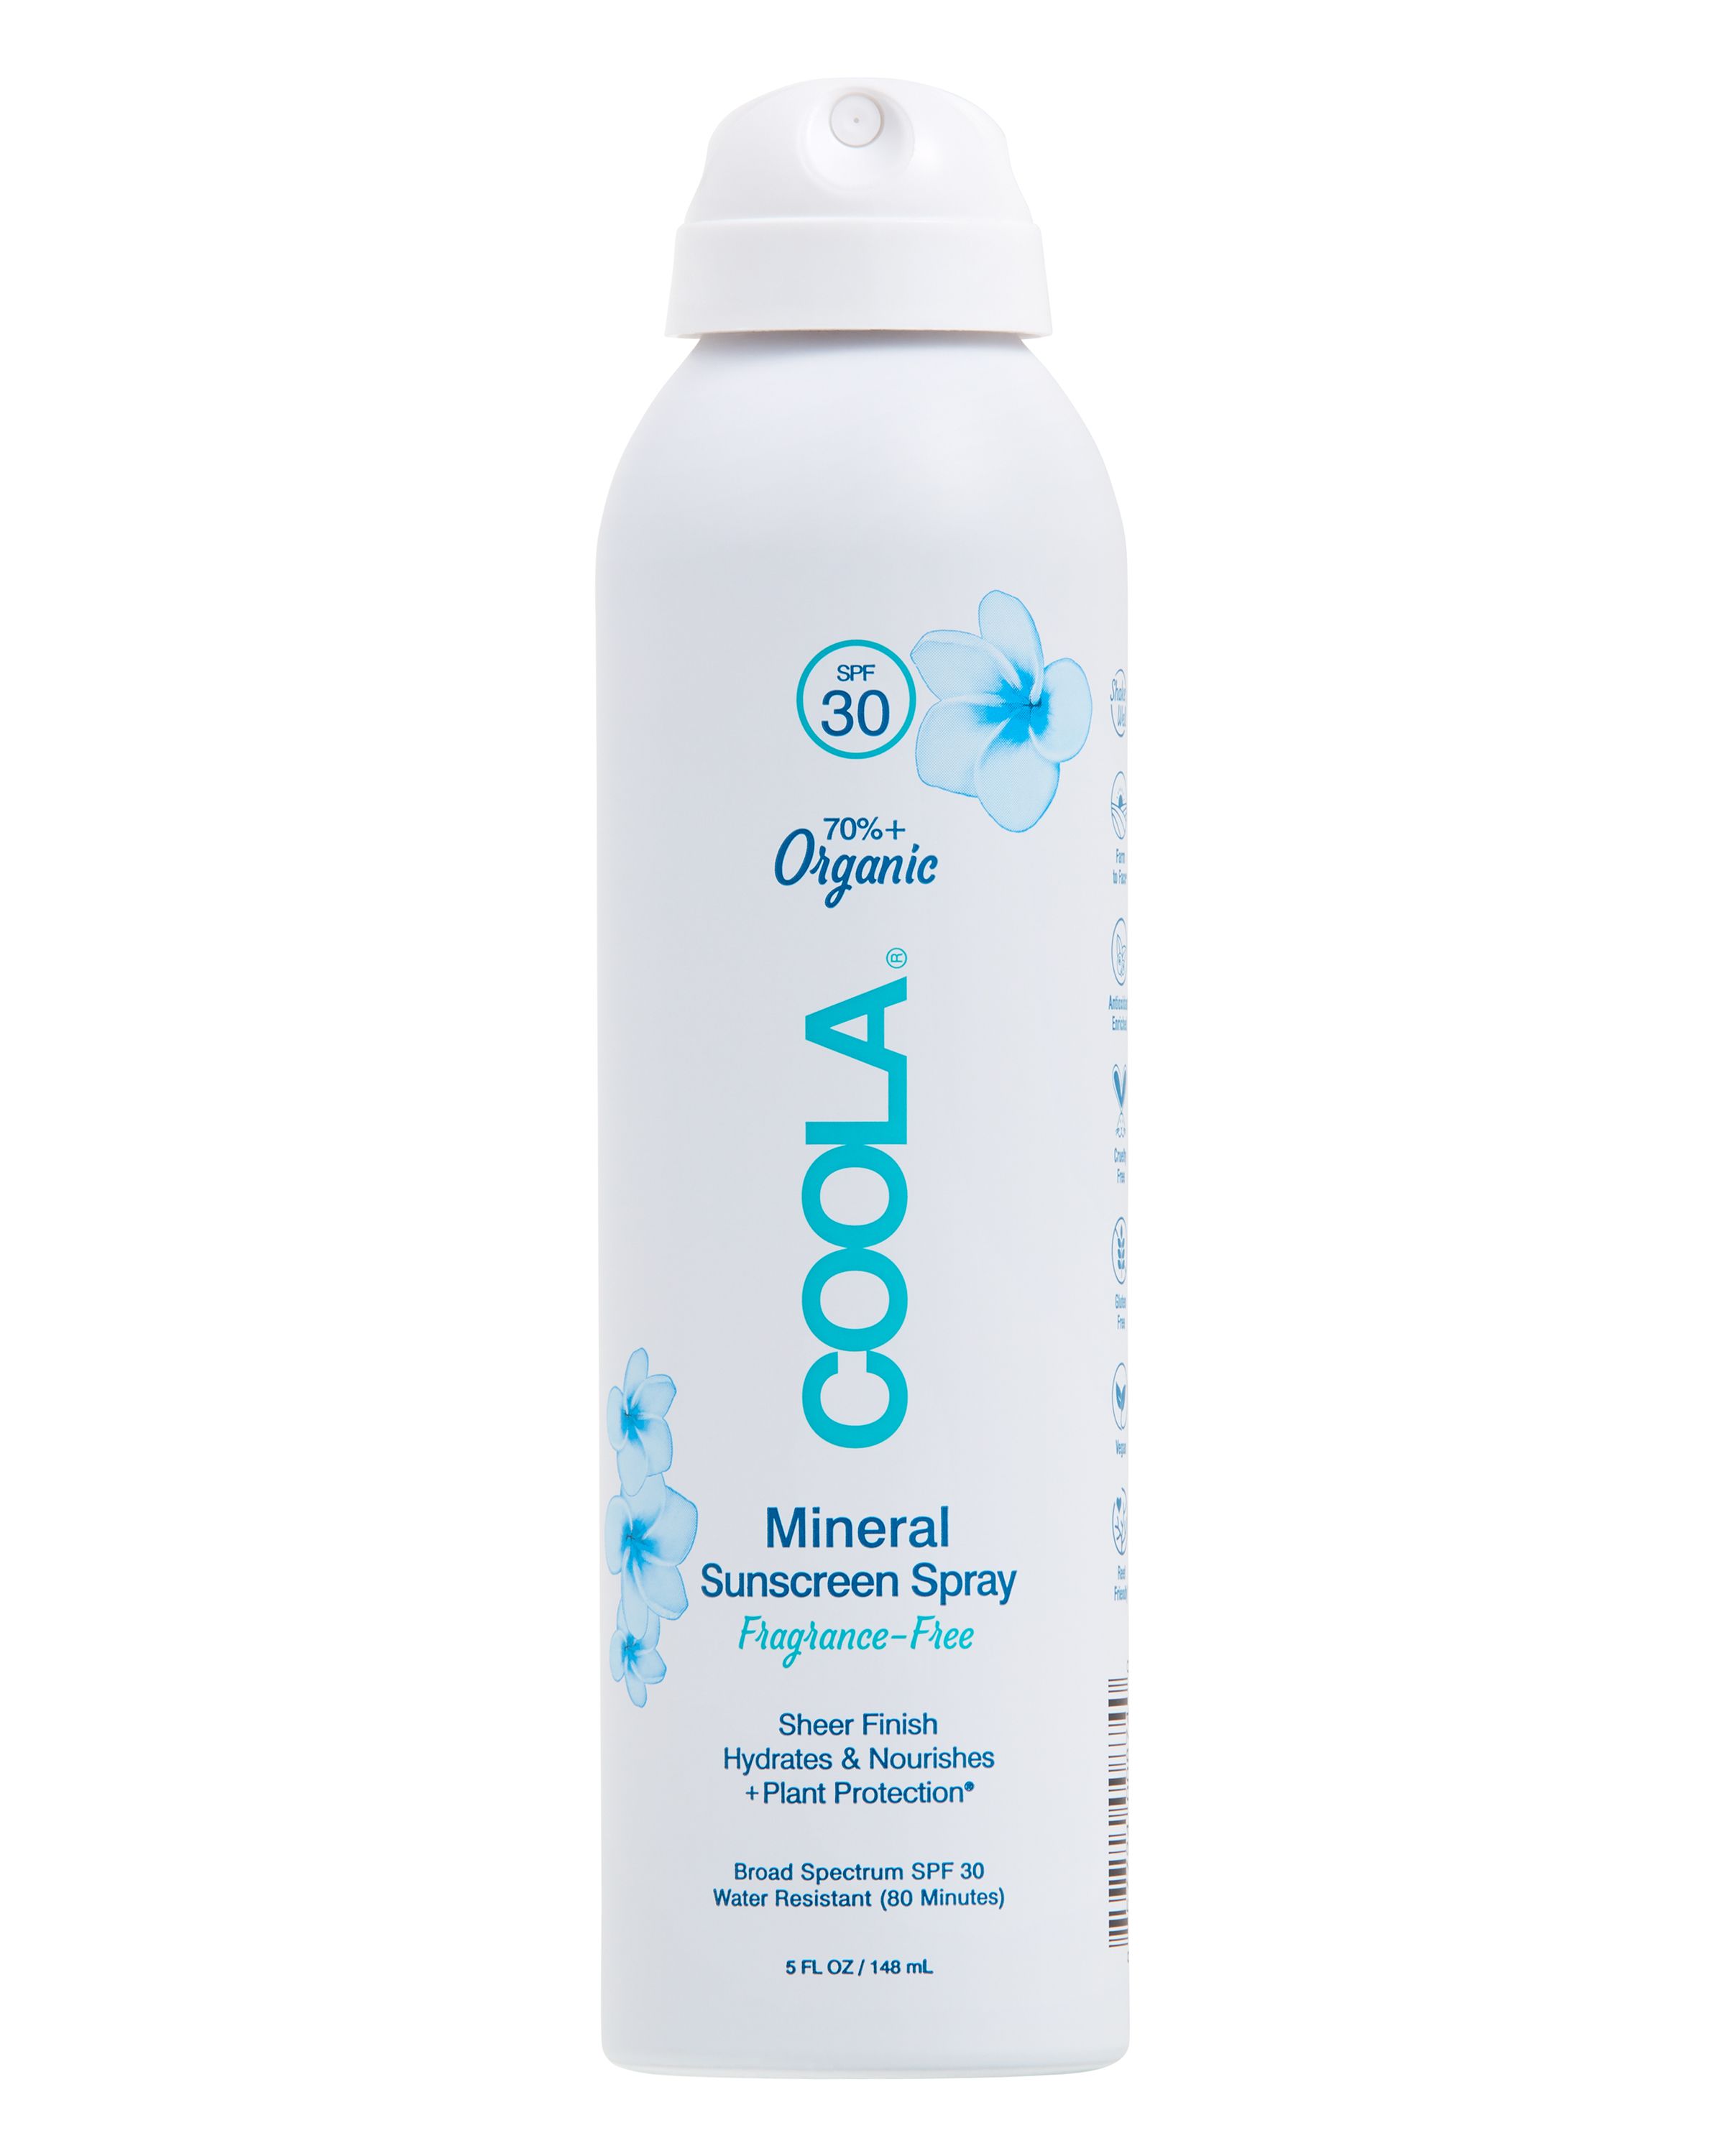 COOLA Mineral Body Organic Sunscreen Spray,  Fragrance Free, SPF 30 - 5 fl oz